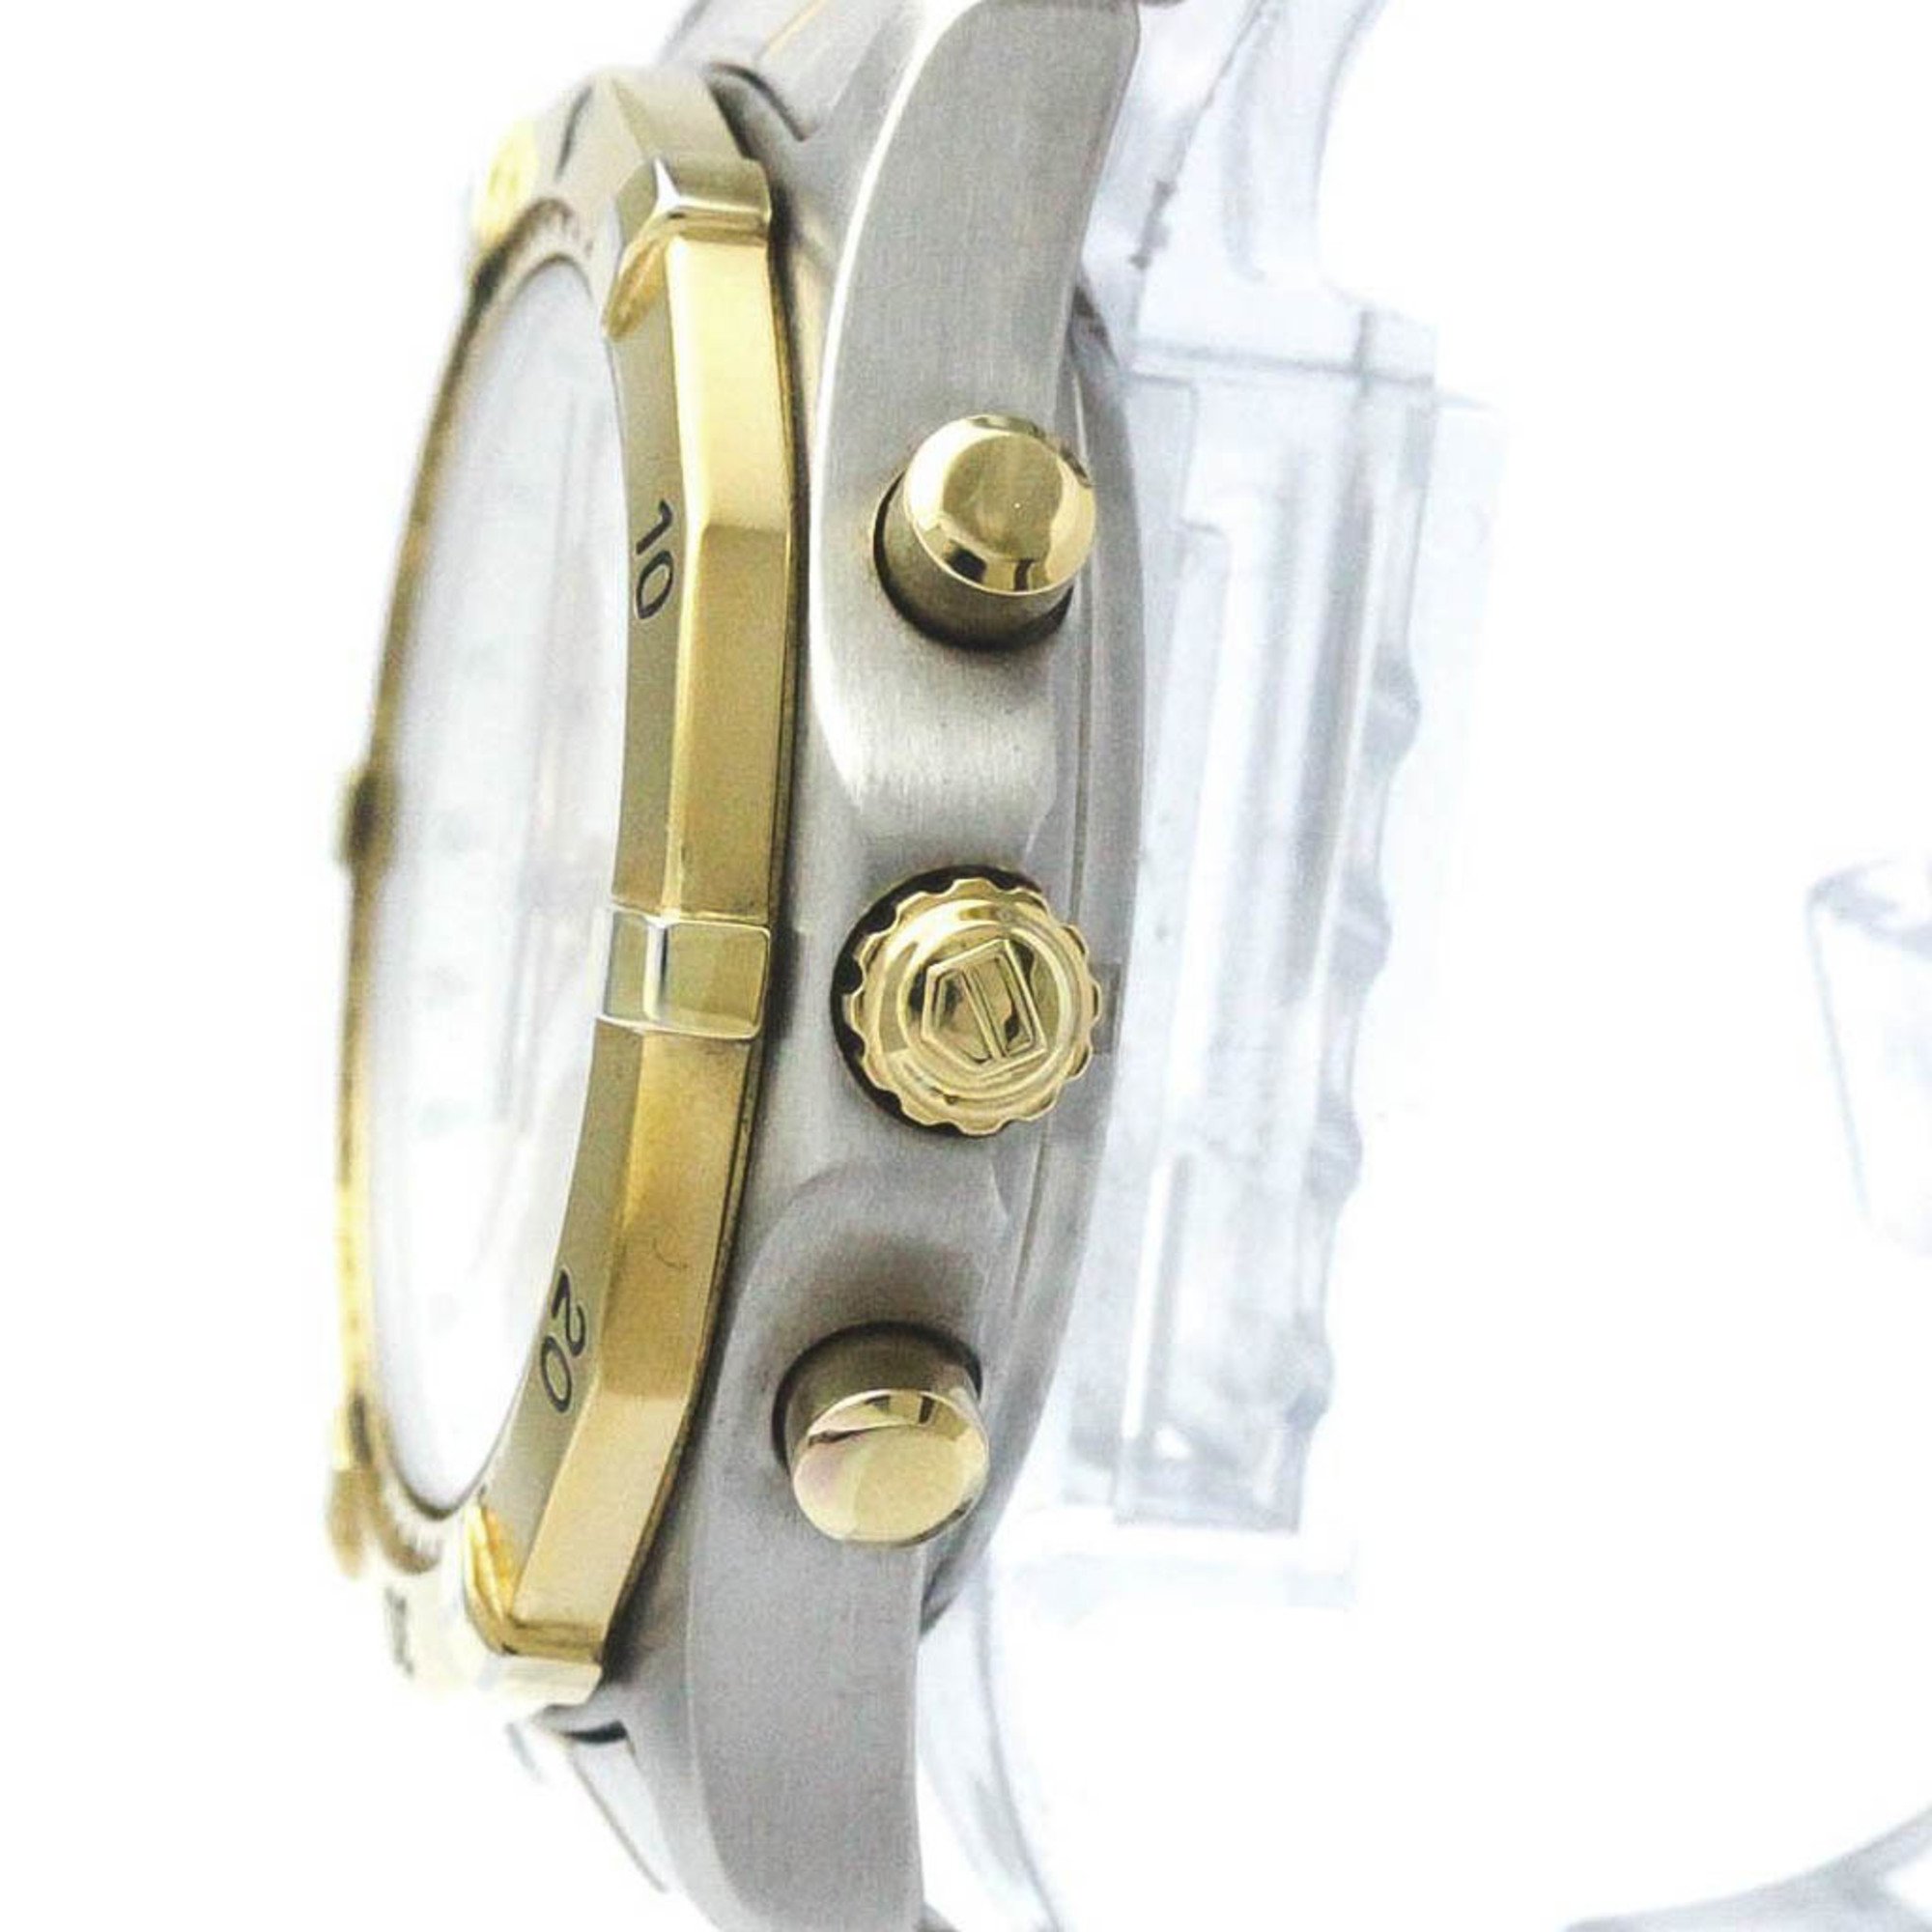 TAG HEUER 2000 Classic Professional Chronograph Quartz Watch CK1121 BF562895